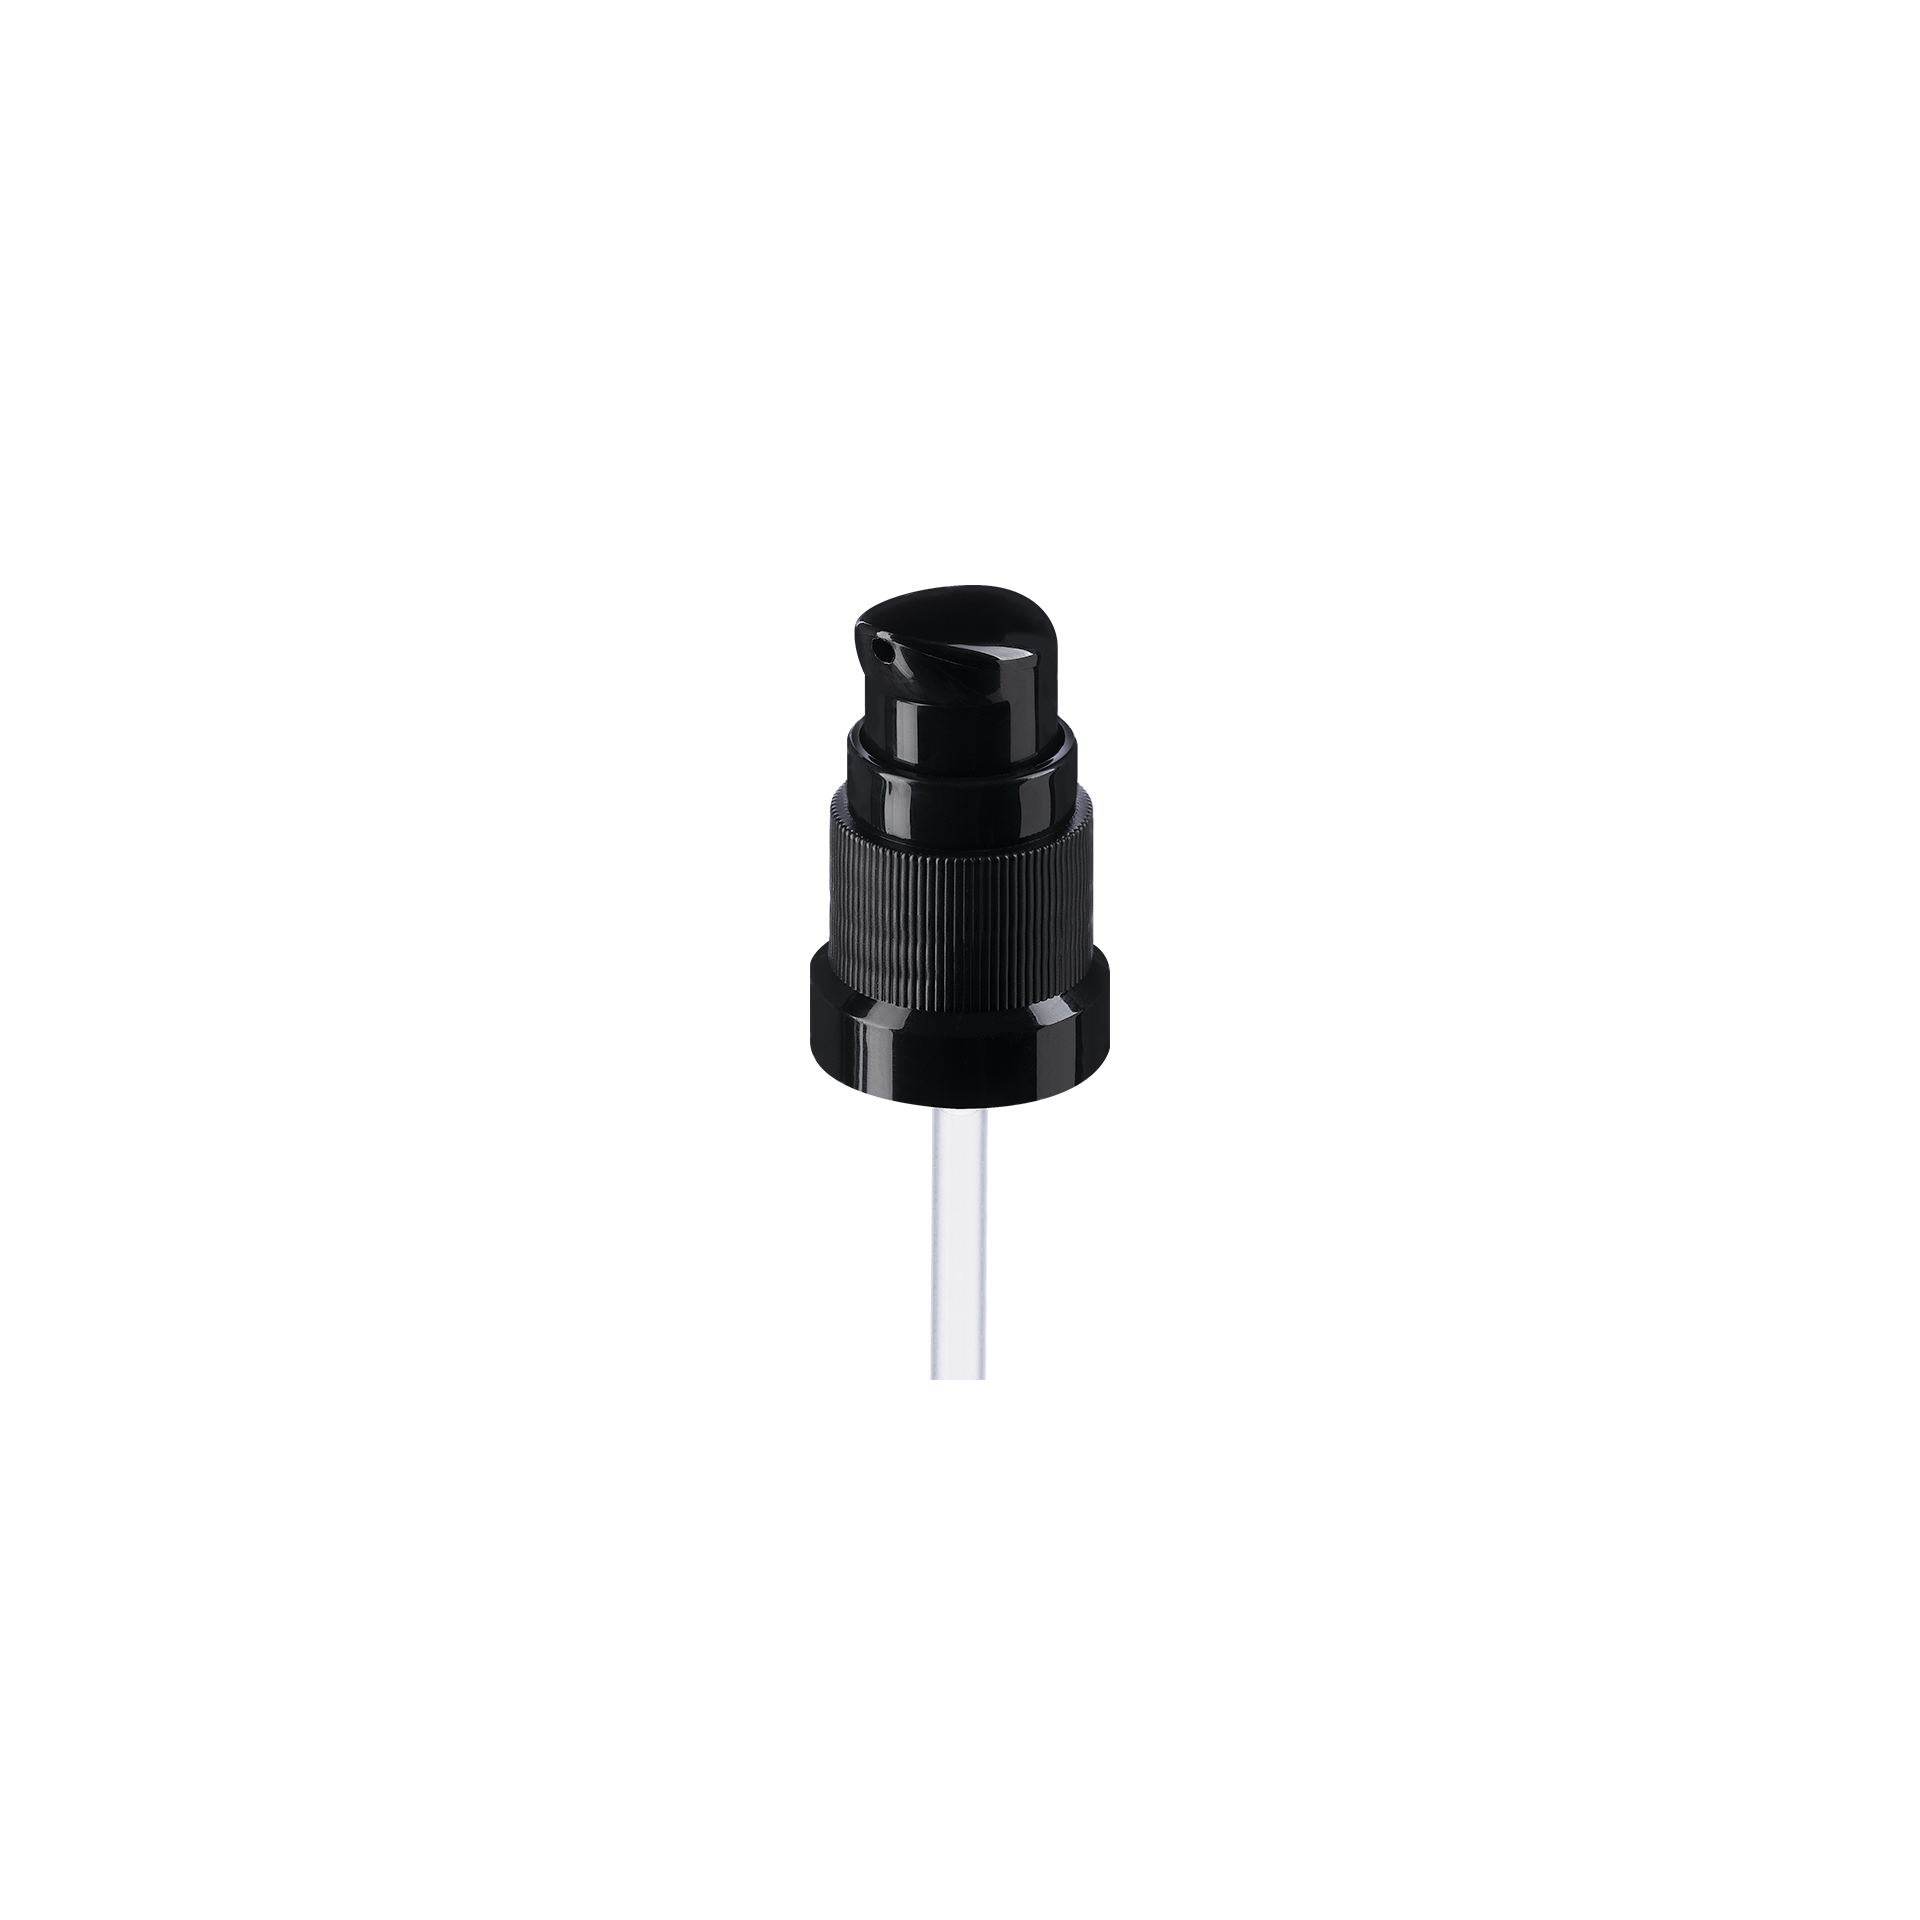 Lotion pump Metropolitan DIN18, PP, black, dose 0.10ml, black security clip (Jasmine 20)